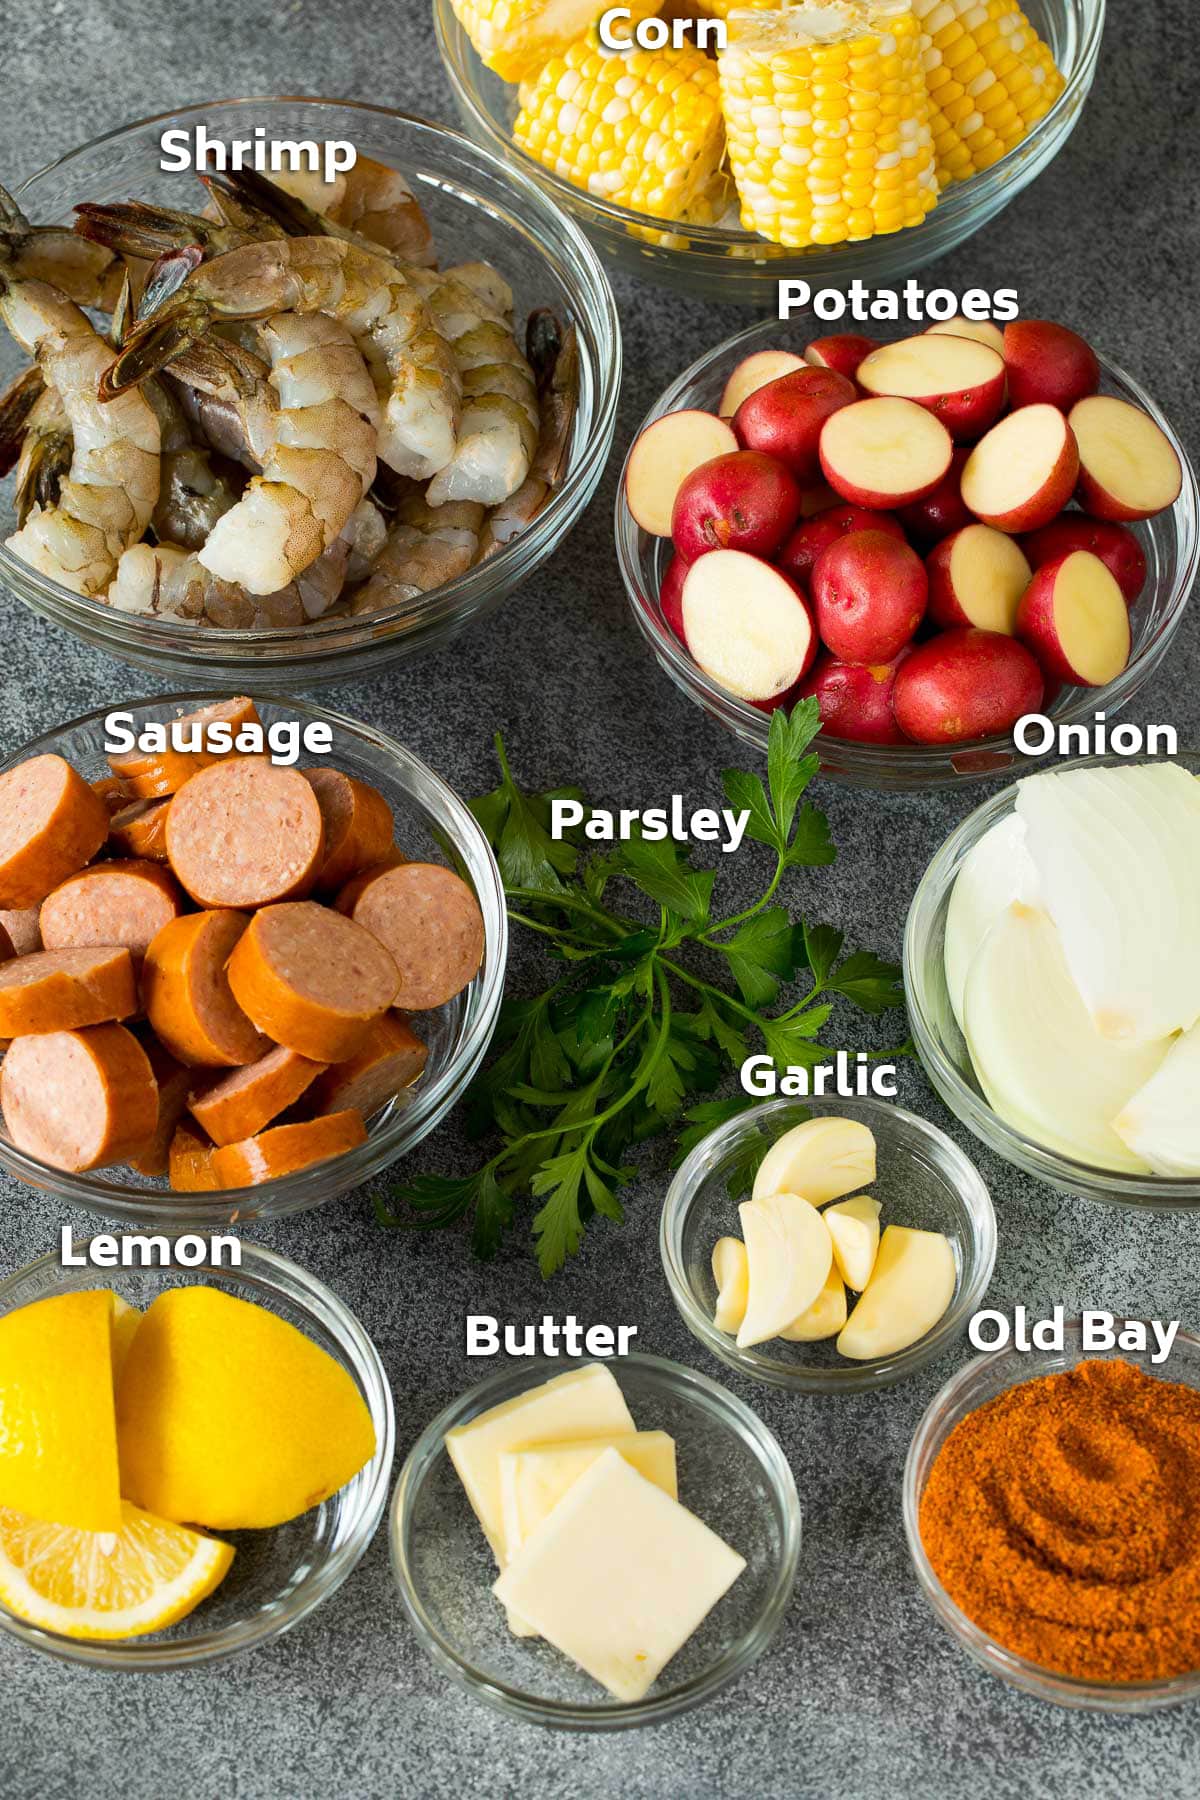 Bowls of ingredients including shrimp, corn, potatoes, sausage and seasonings.